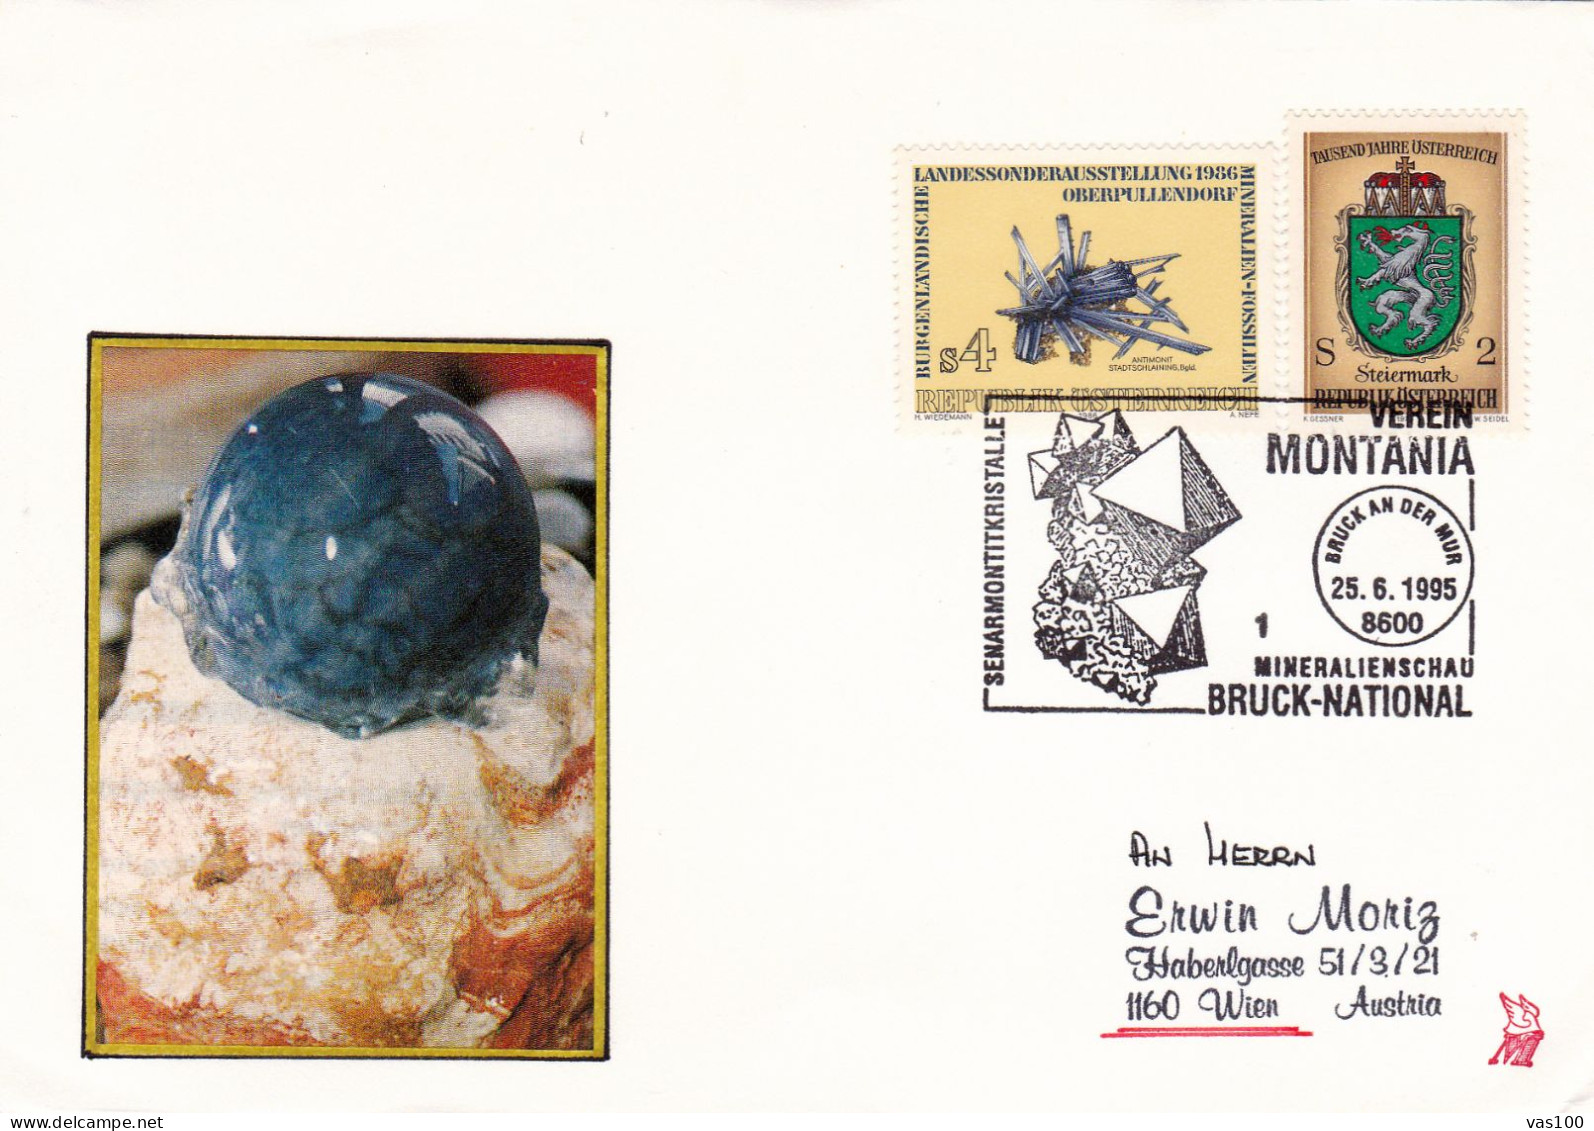 AUSTRIA POSTAL HISTORY / MINERALIENSCHAU BRUCK-NATIONAL, 25.06.1995 - Mineralen